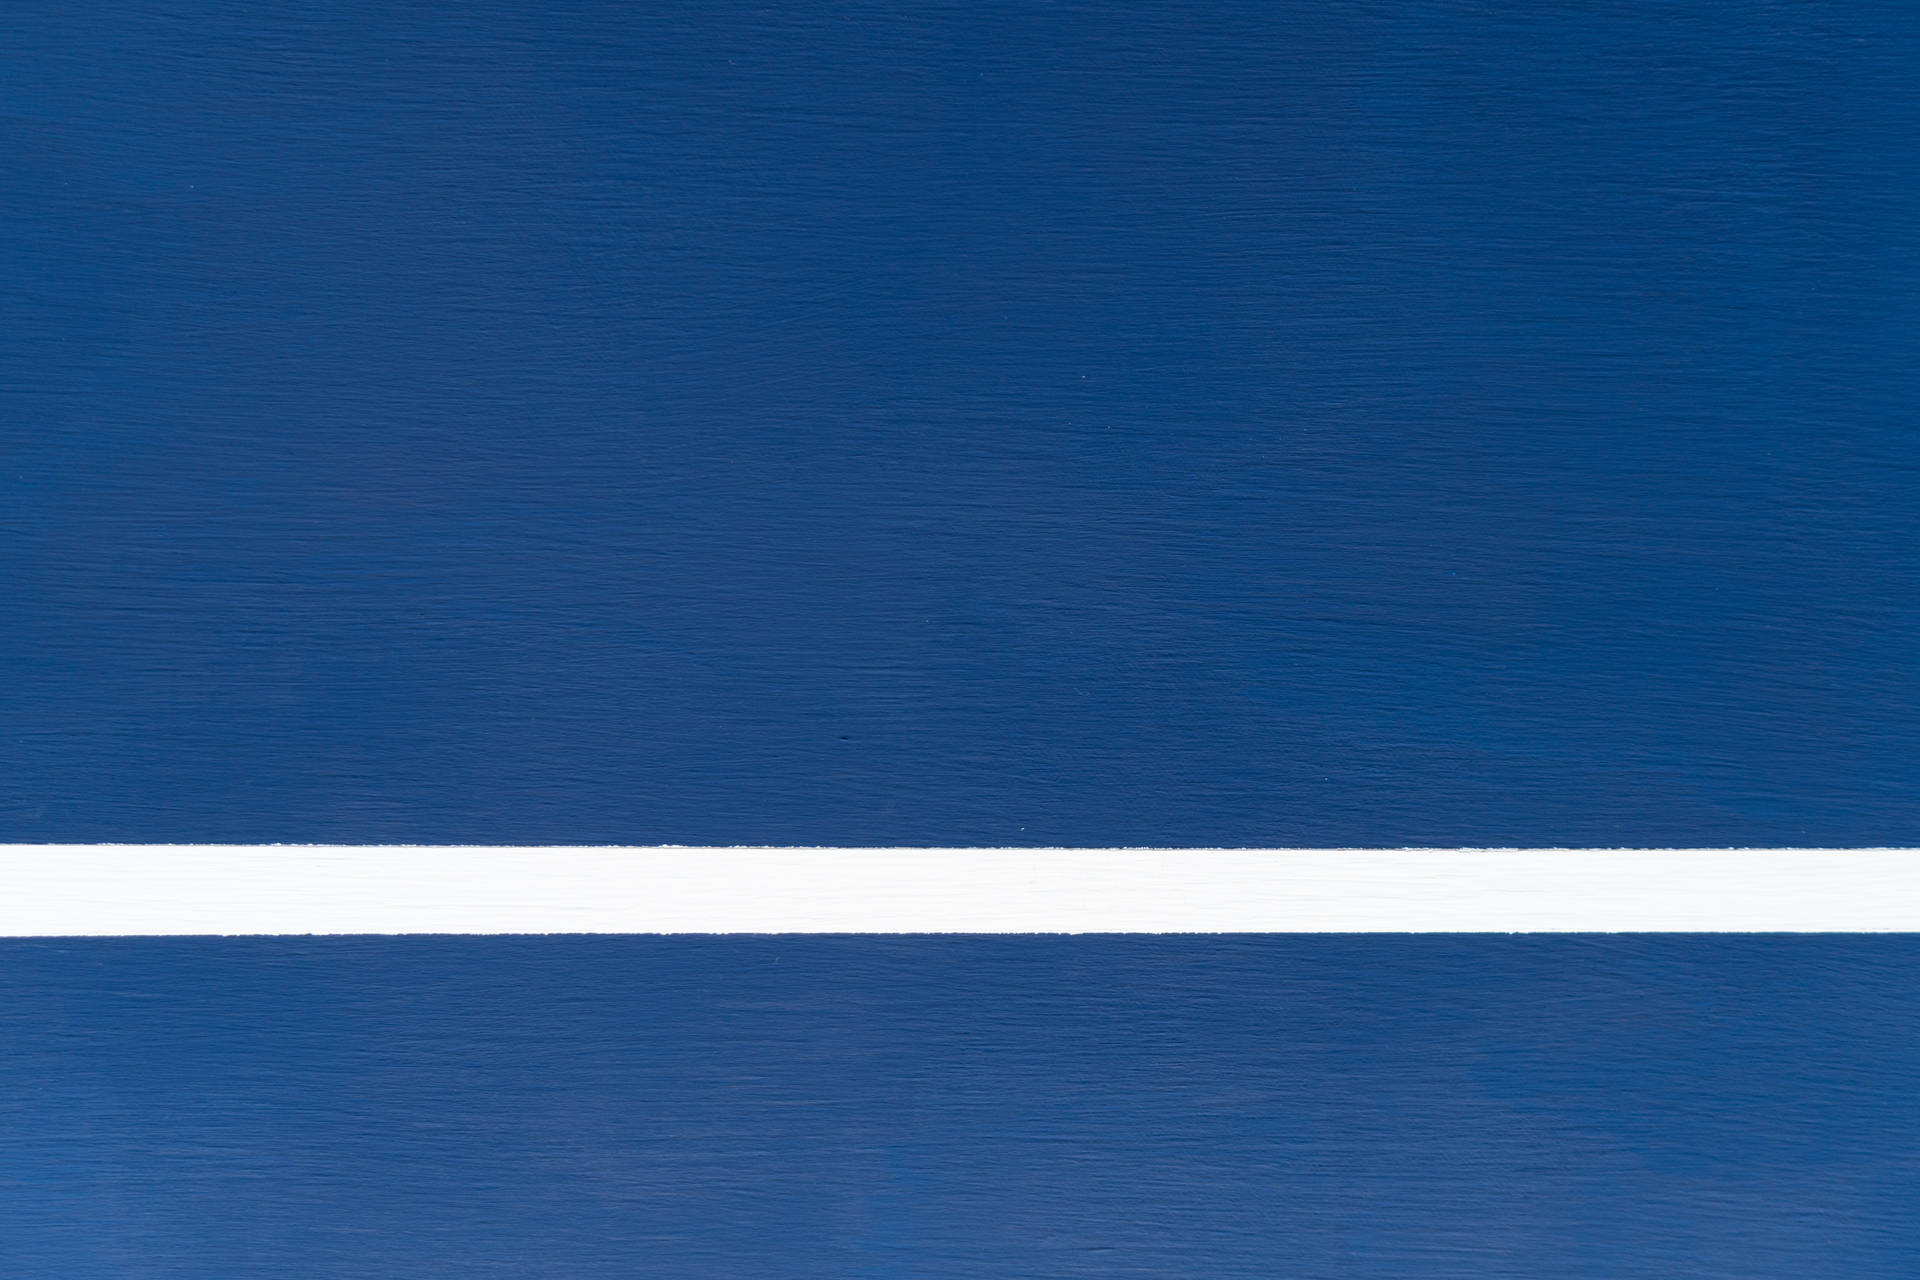 White Line In Navy Blue Background